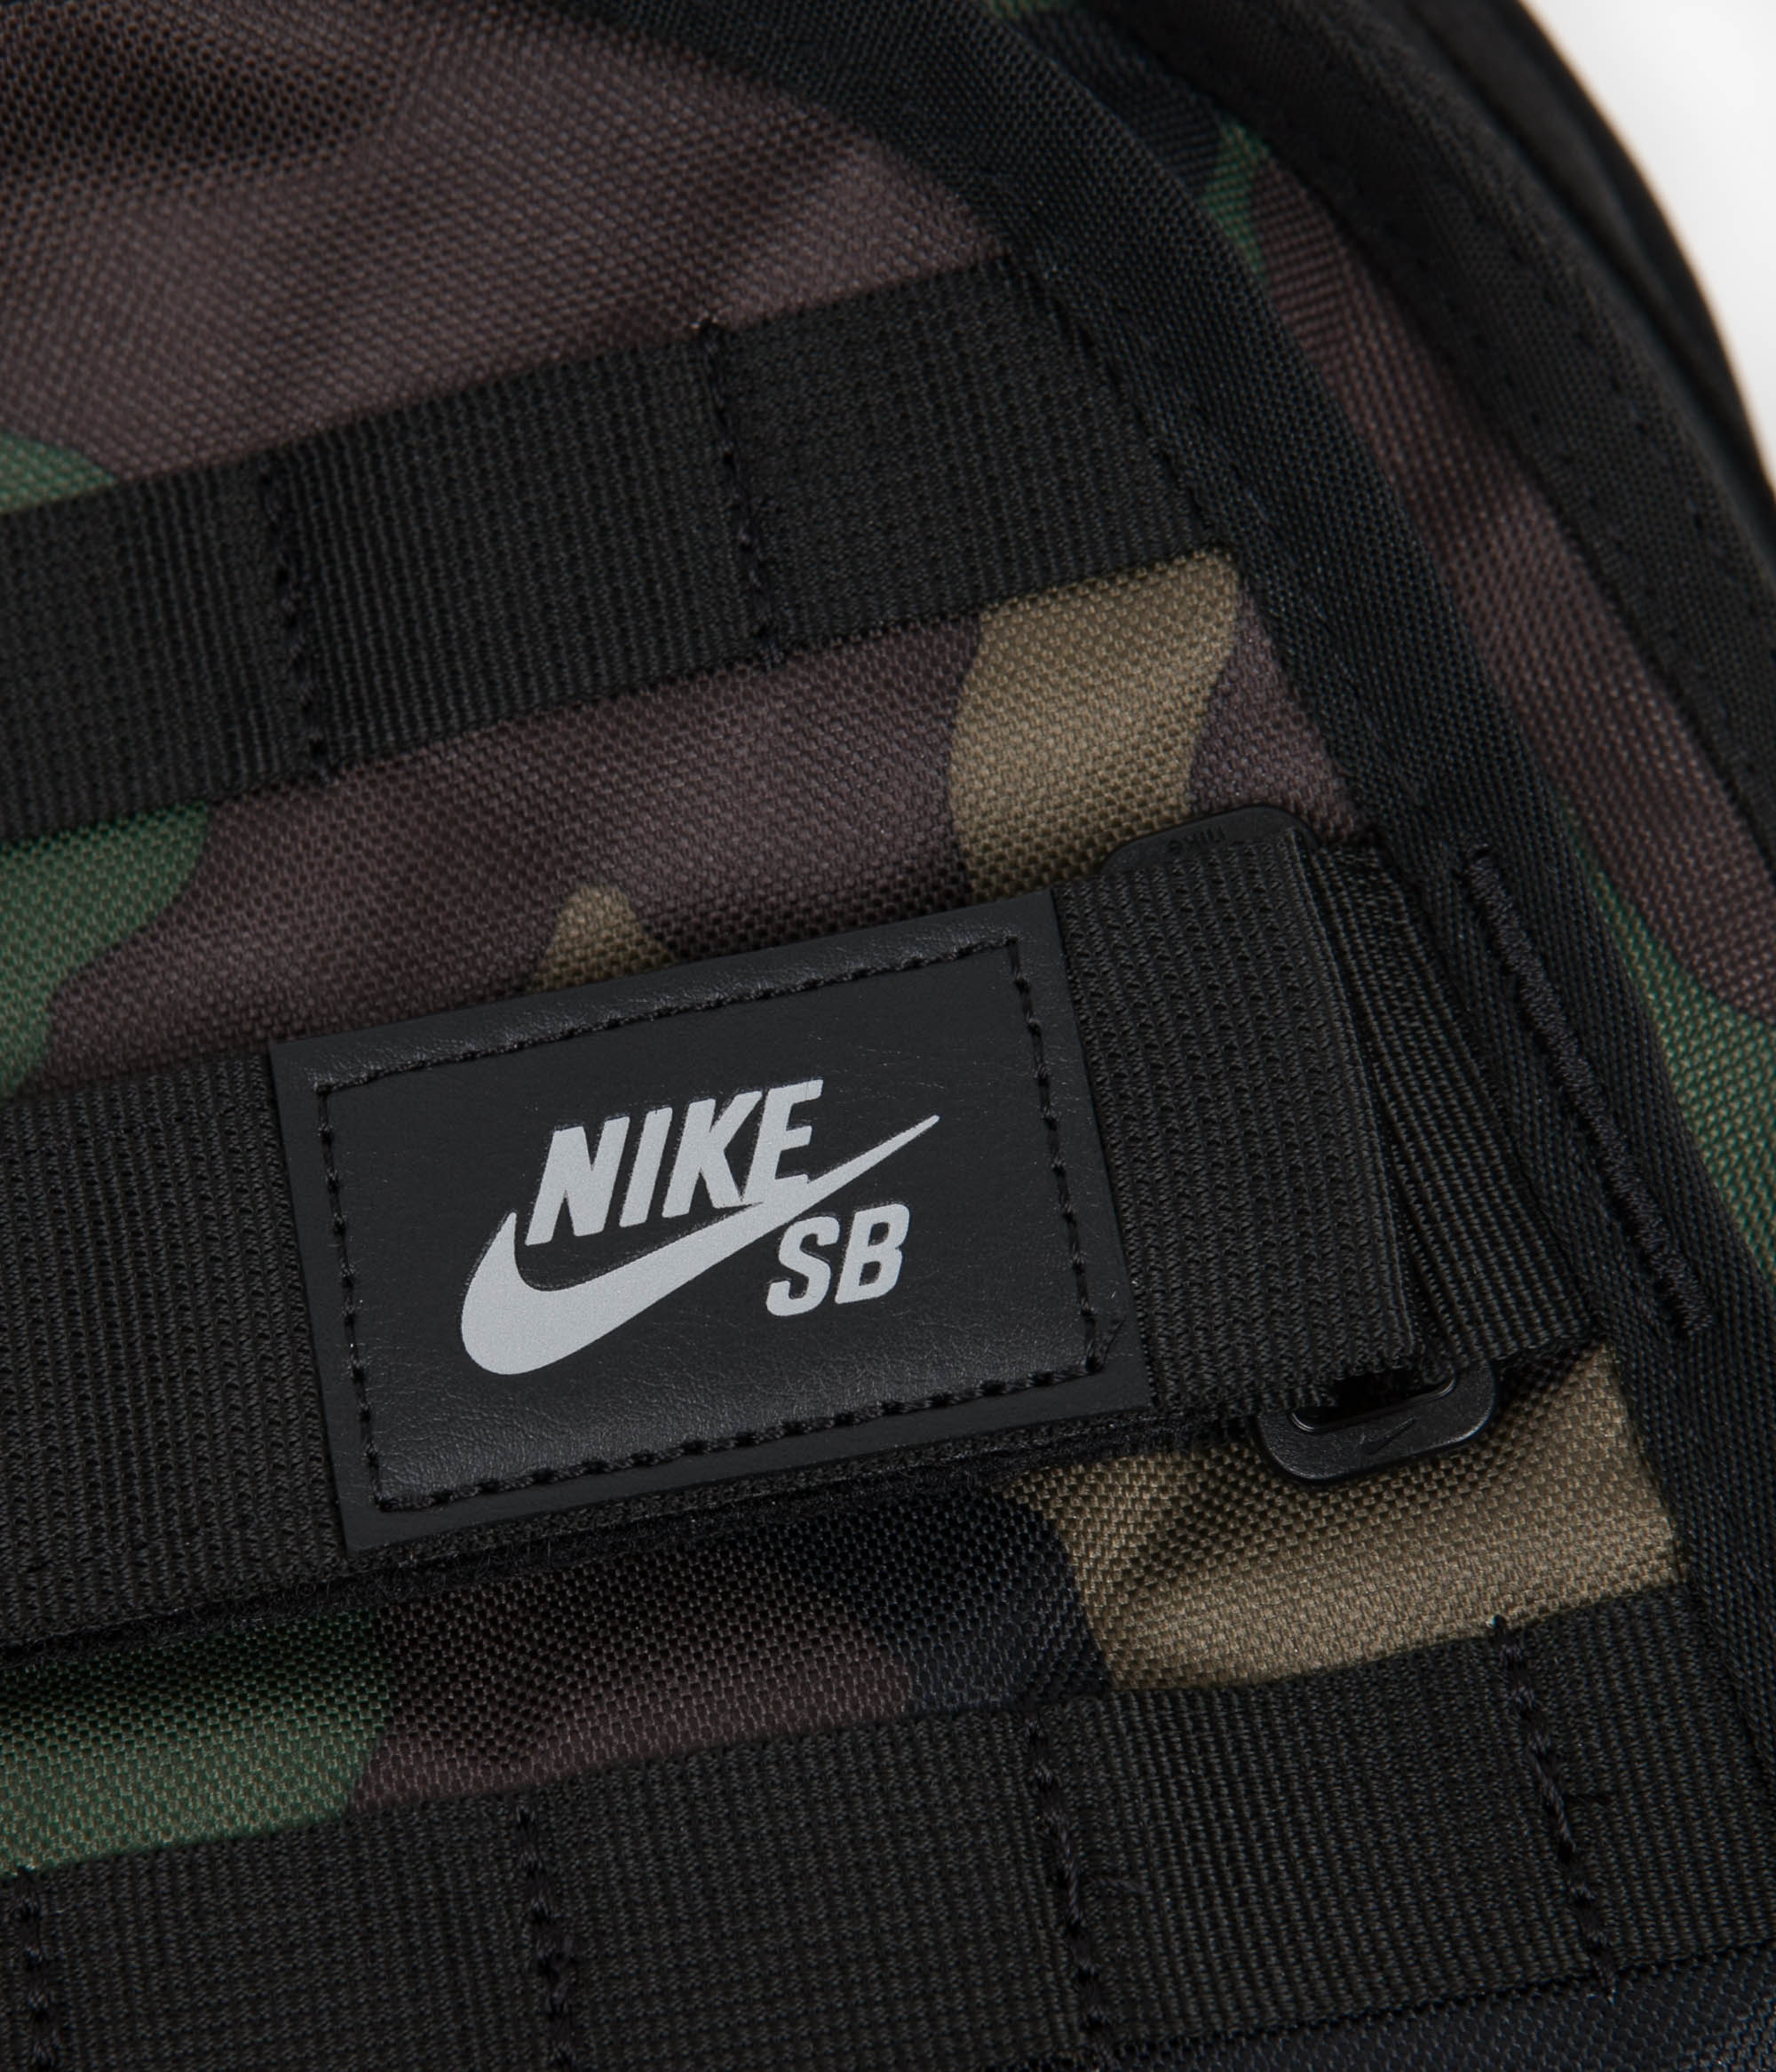 Nike Rpm Sb Backpack Online